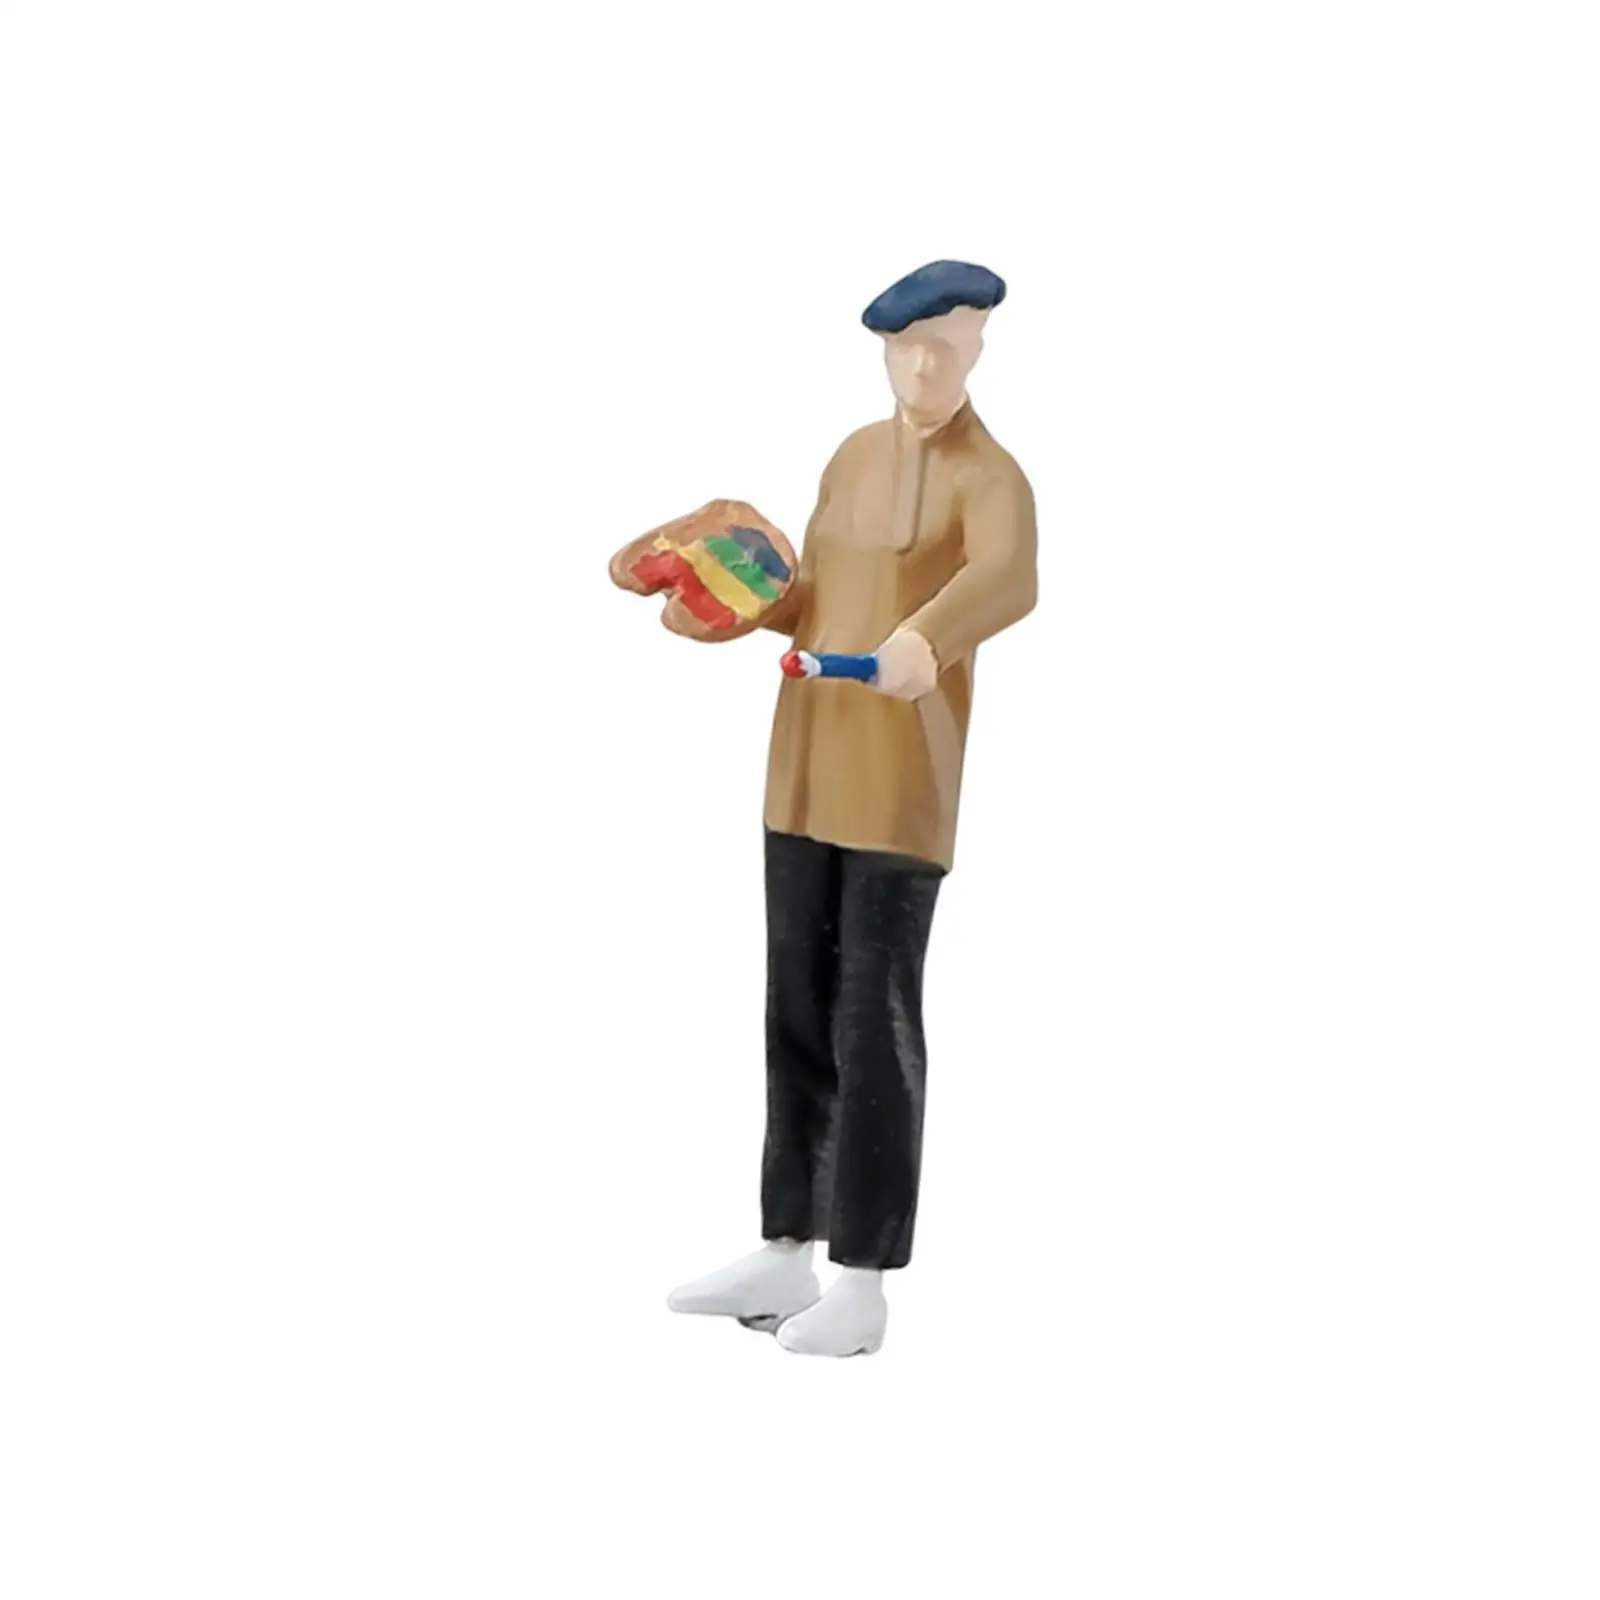 People Figurines Realistic for Model Train Layout Sand Table Miniature Scene